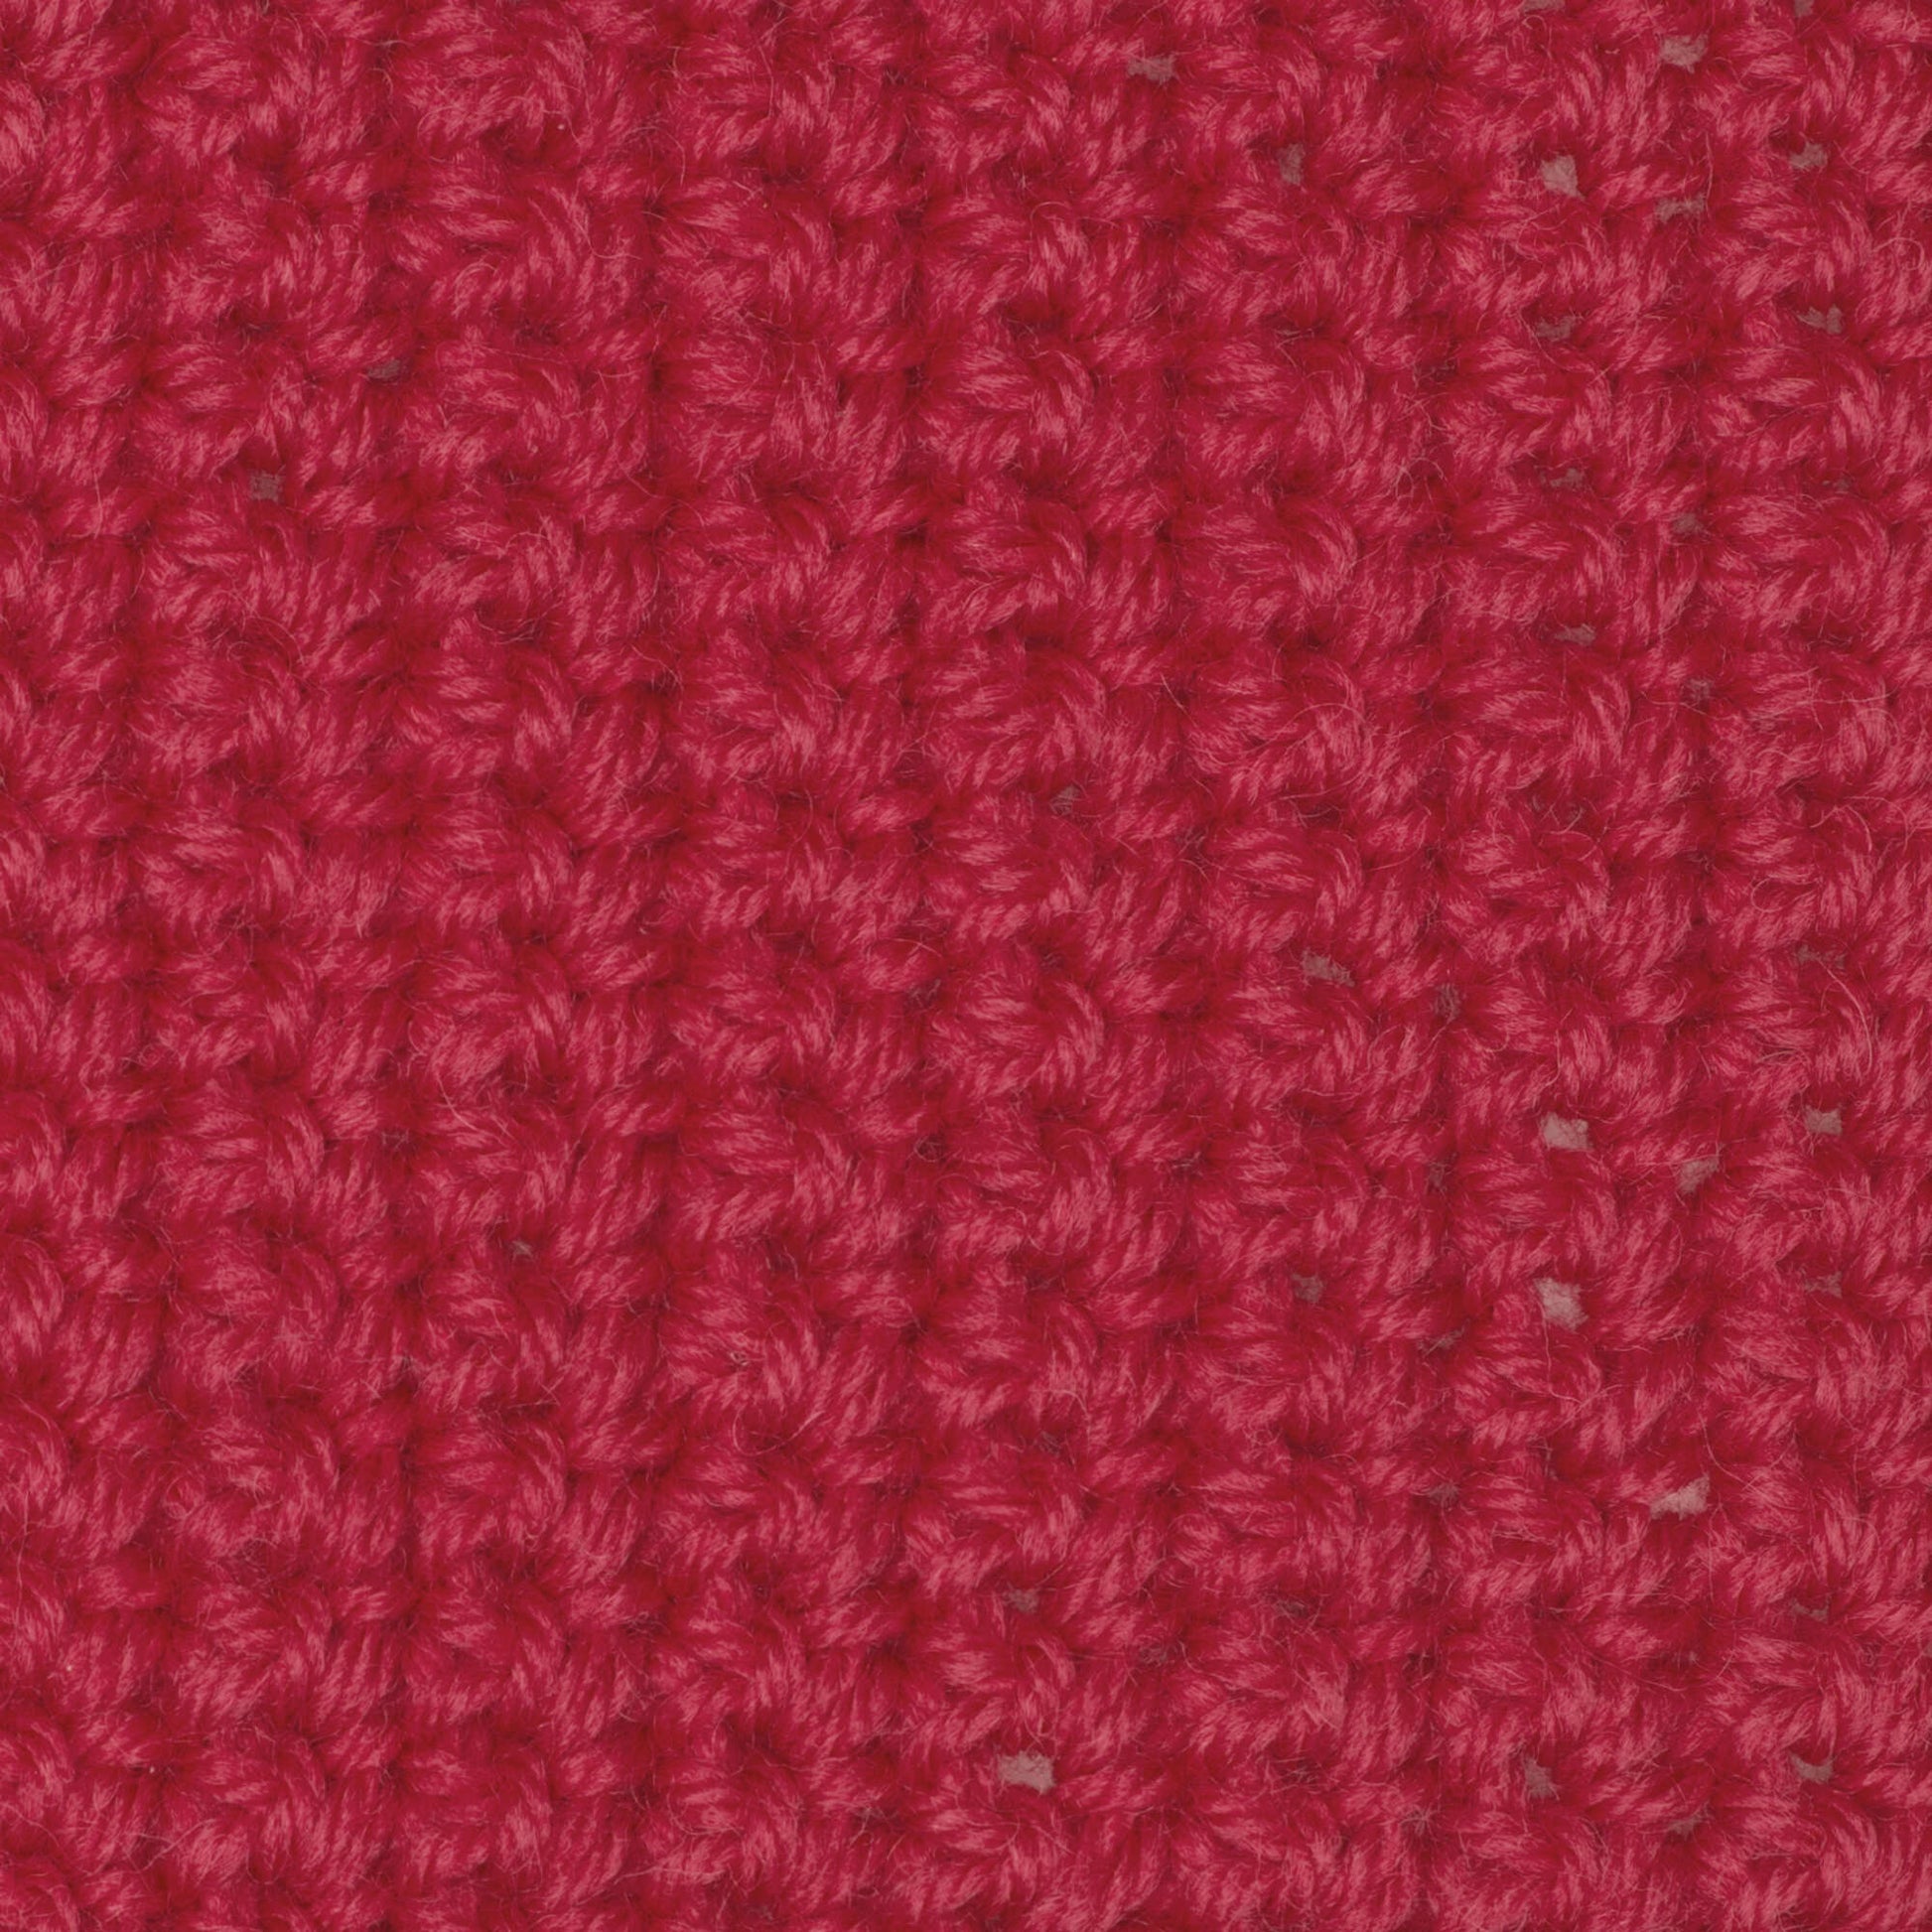 Patons Classic Wool DK Superwash Yarn - Discontinued Shades Deep Blush